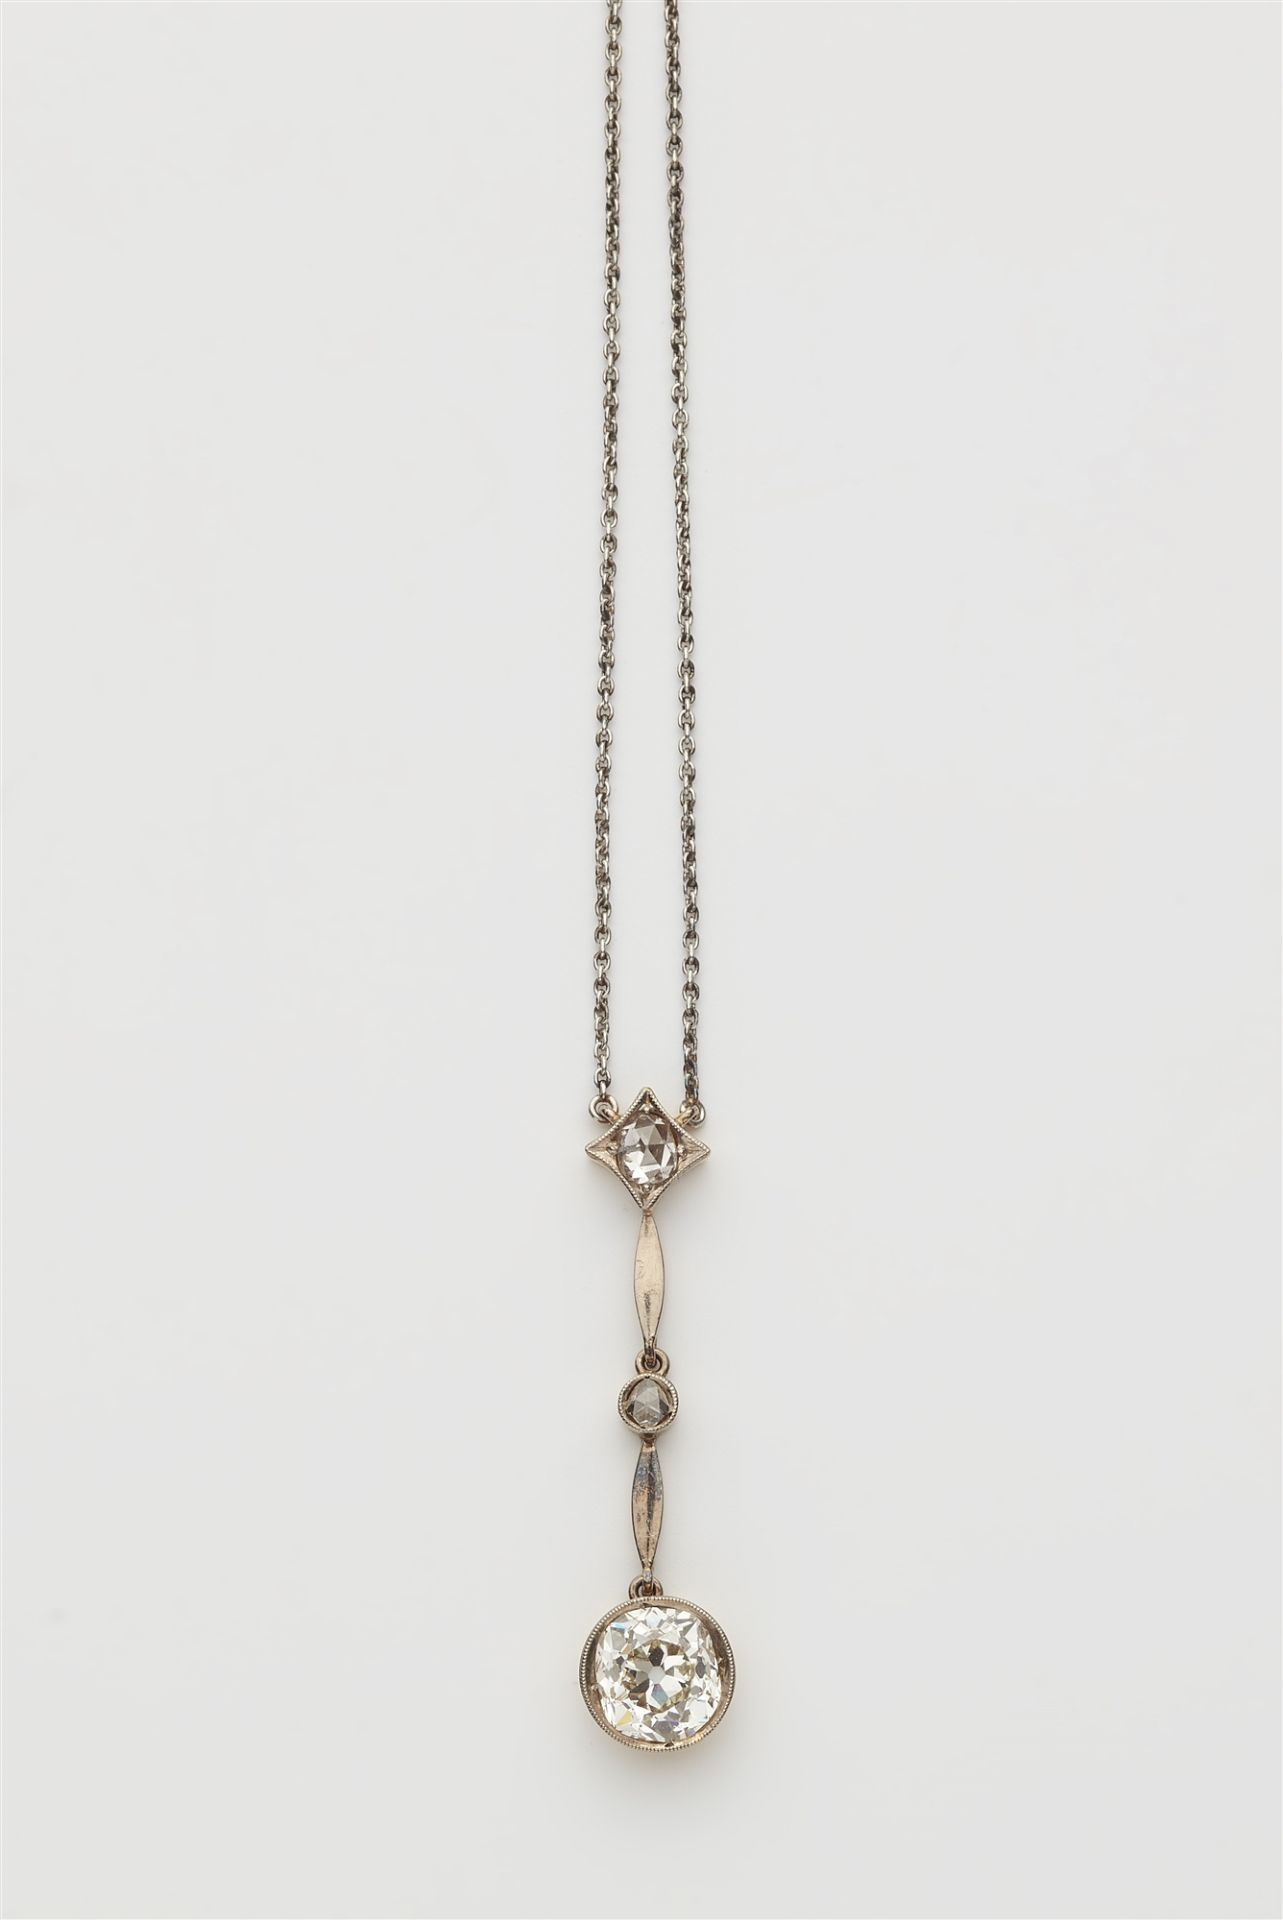 A Belle Epoque 14 kt gold platinum and European old-cut diamond solitaire pendant necklace.